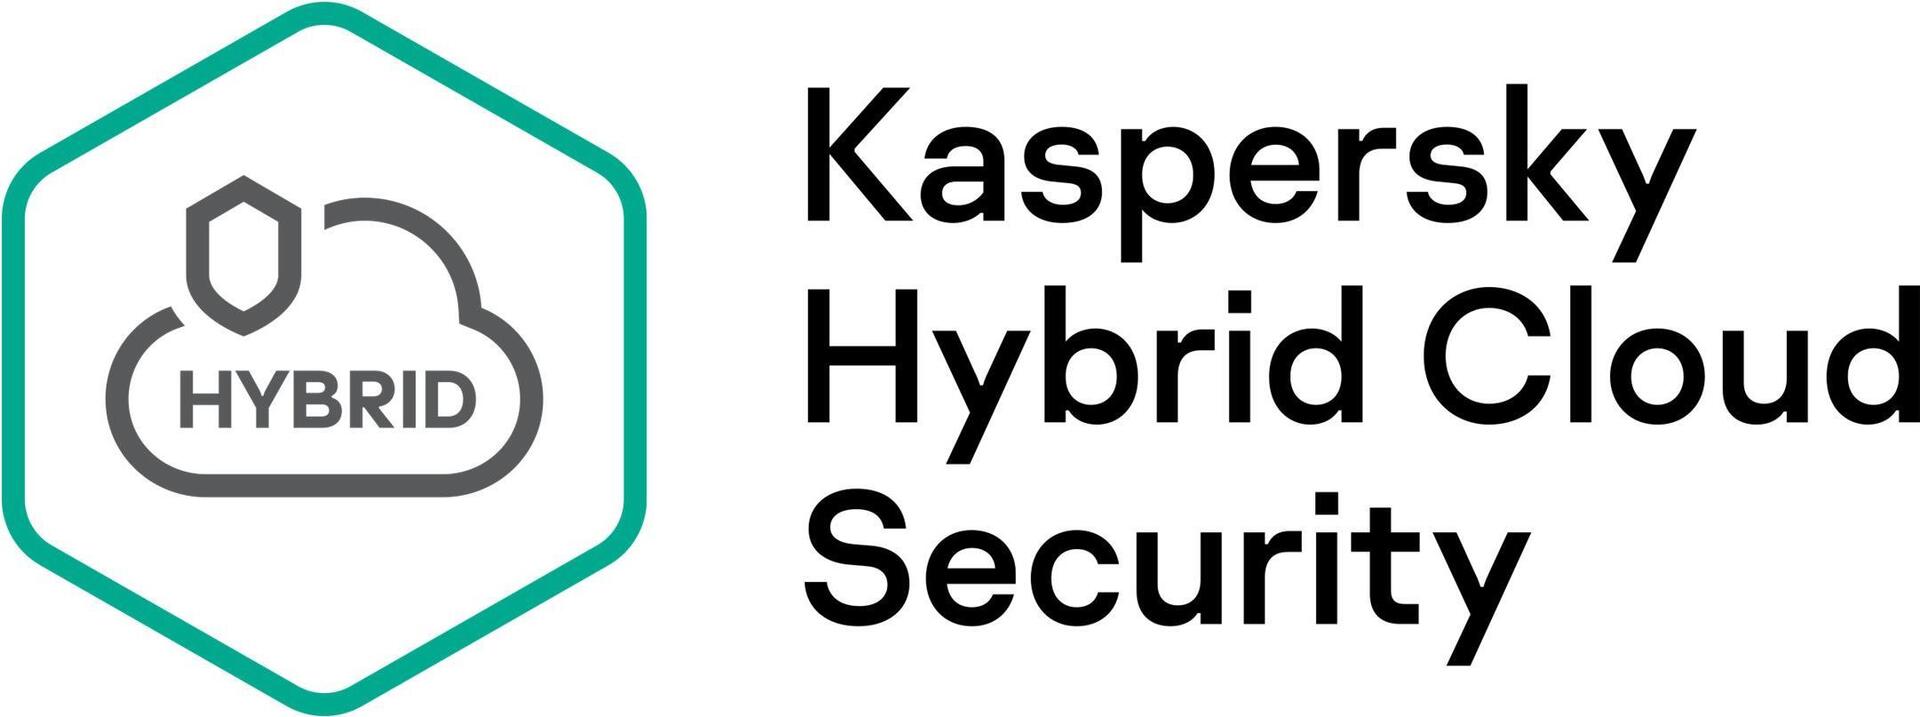 Kaspersky Hybrid Cloud Security Desktop (KL4155XAMT9)